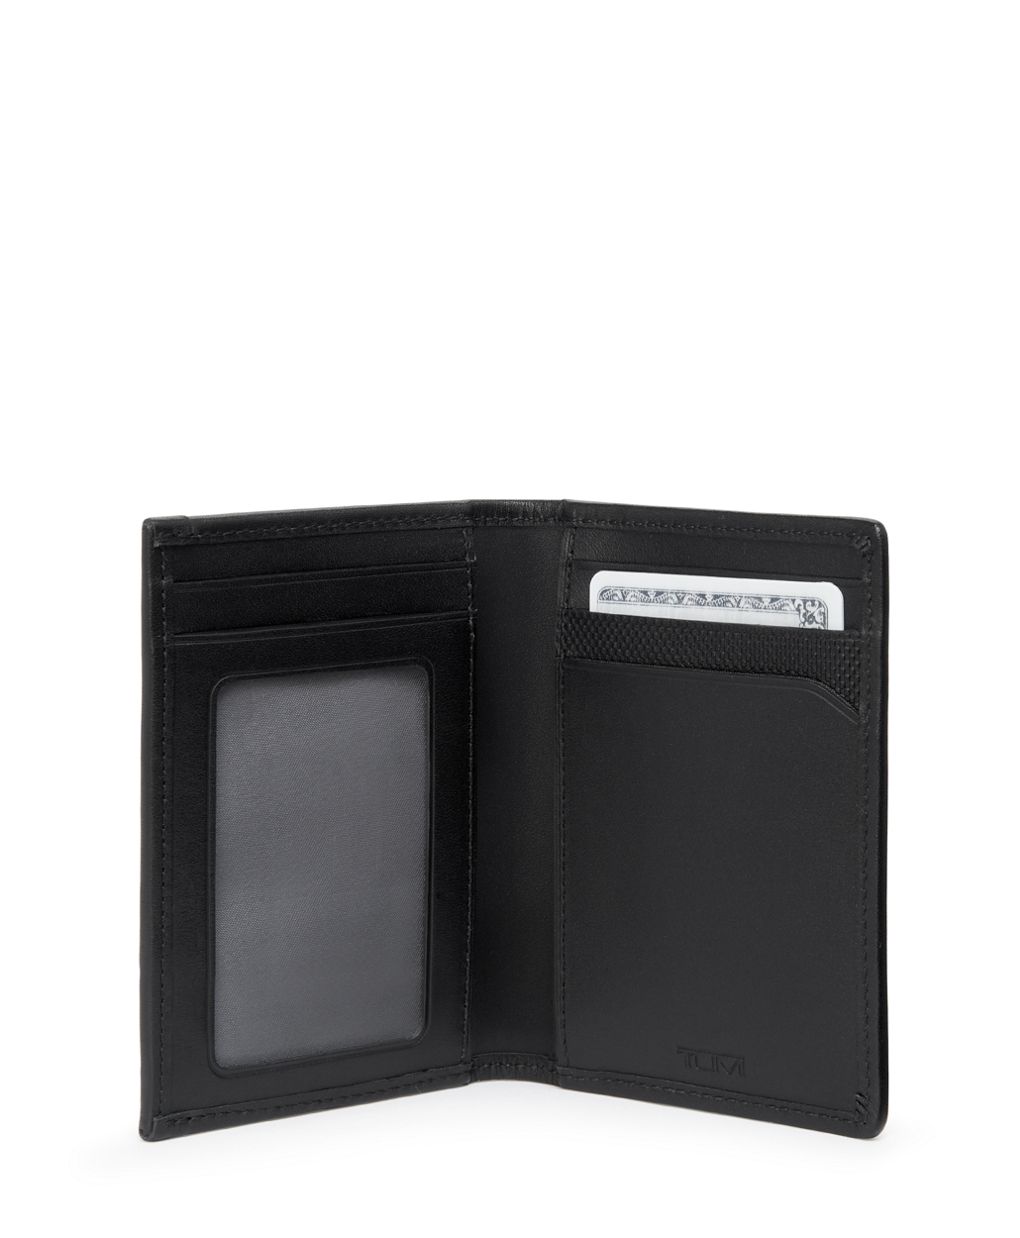 Ballistic Nylon Card Wallet Black Camo Nylon